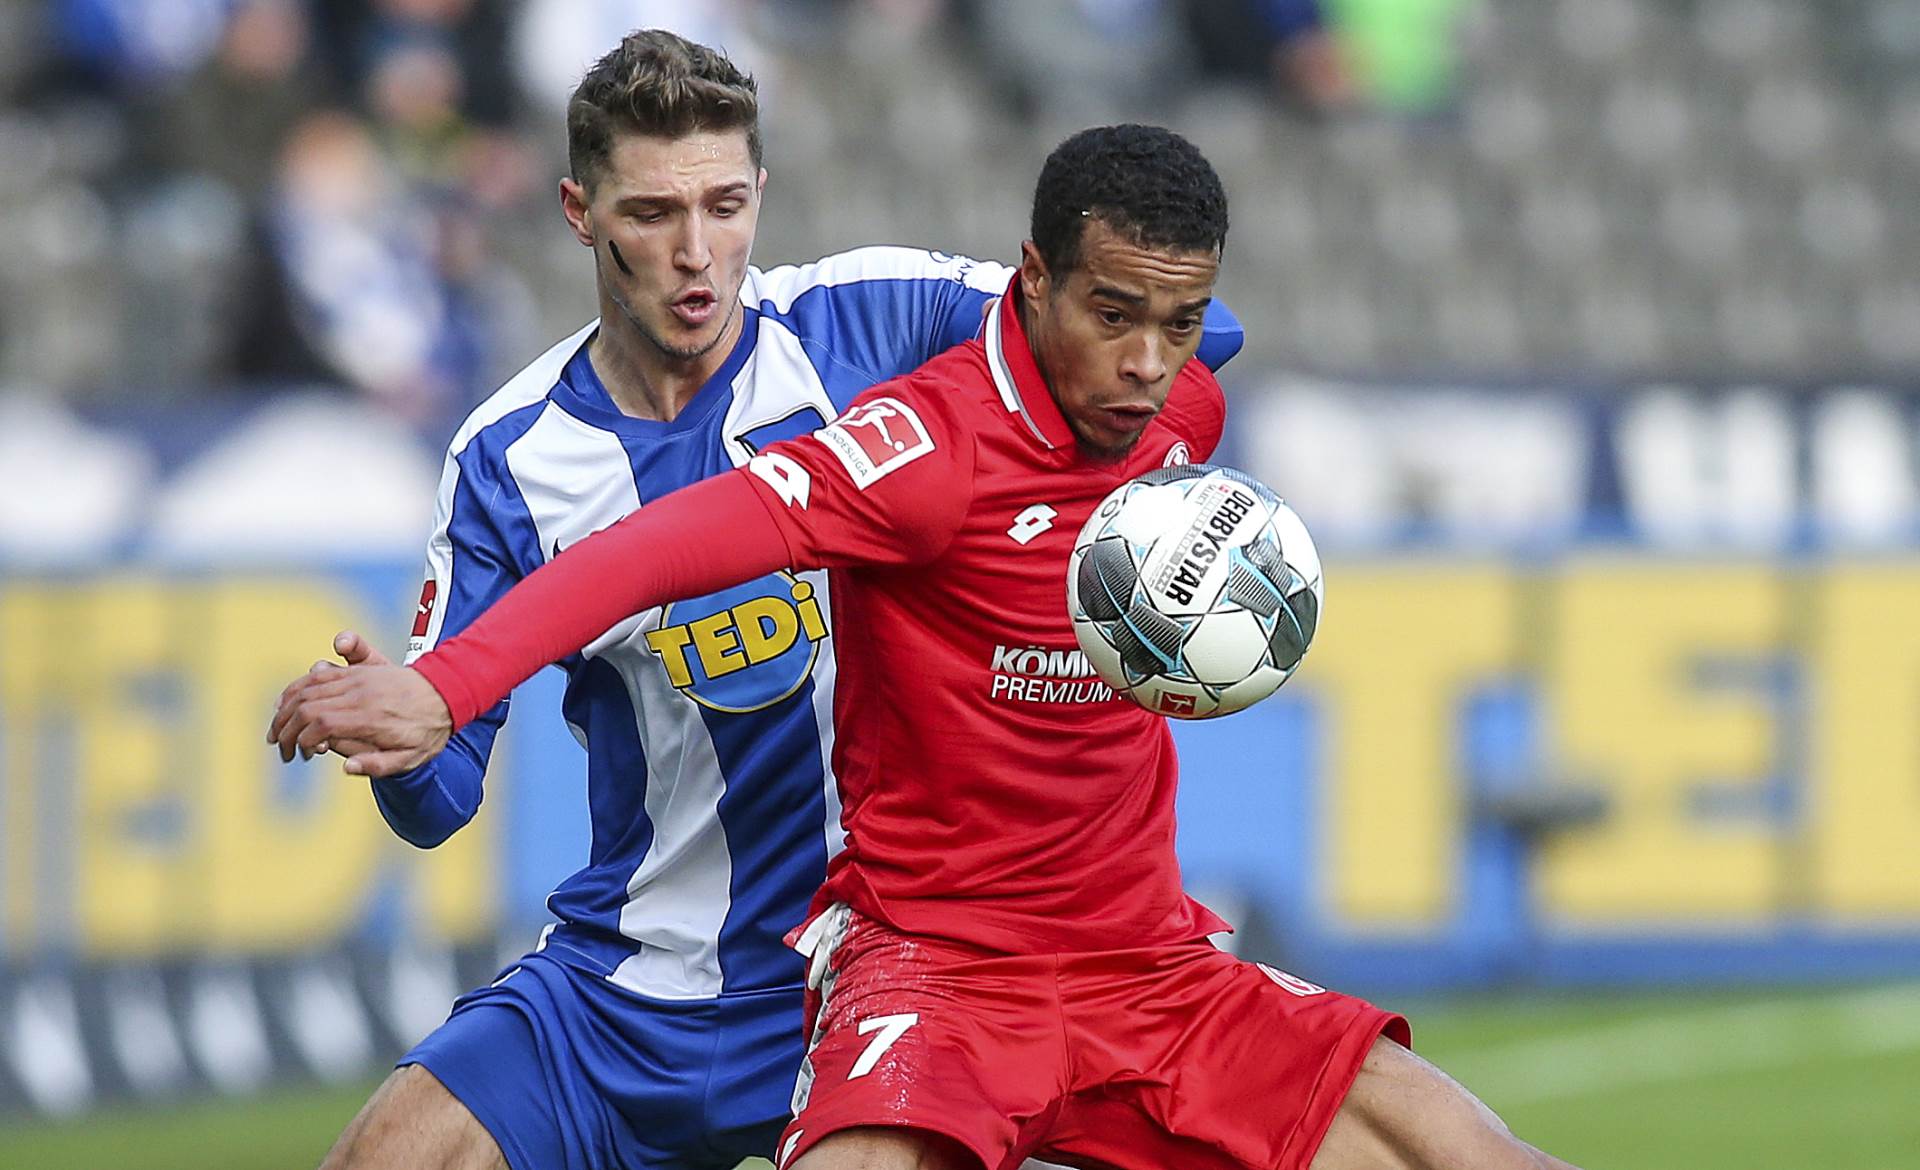  Bundesliga 21. kolo: Herta Majnc 1:3, Verder Union Berlin 0:2, Šalke Paderborn 1:1 